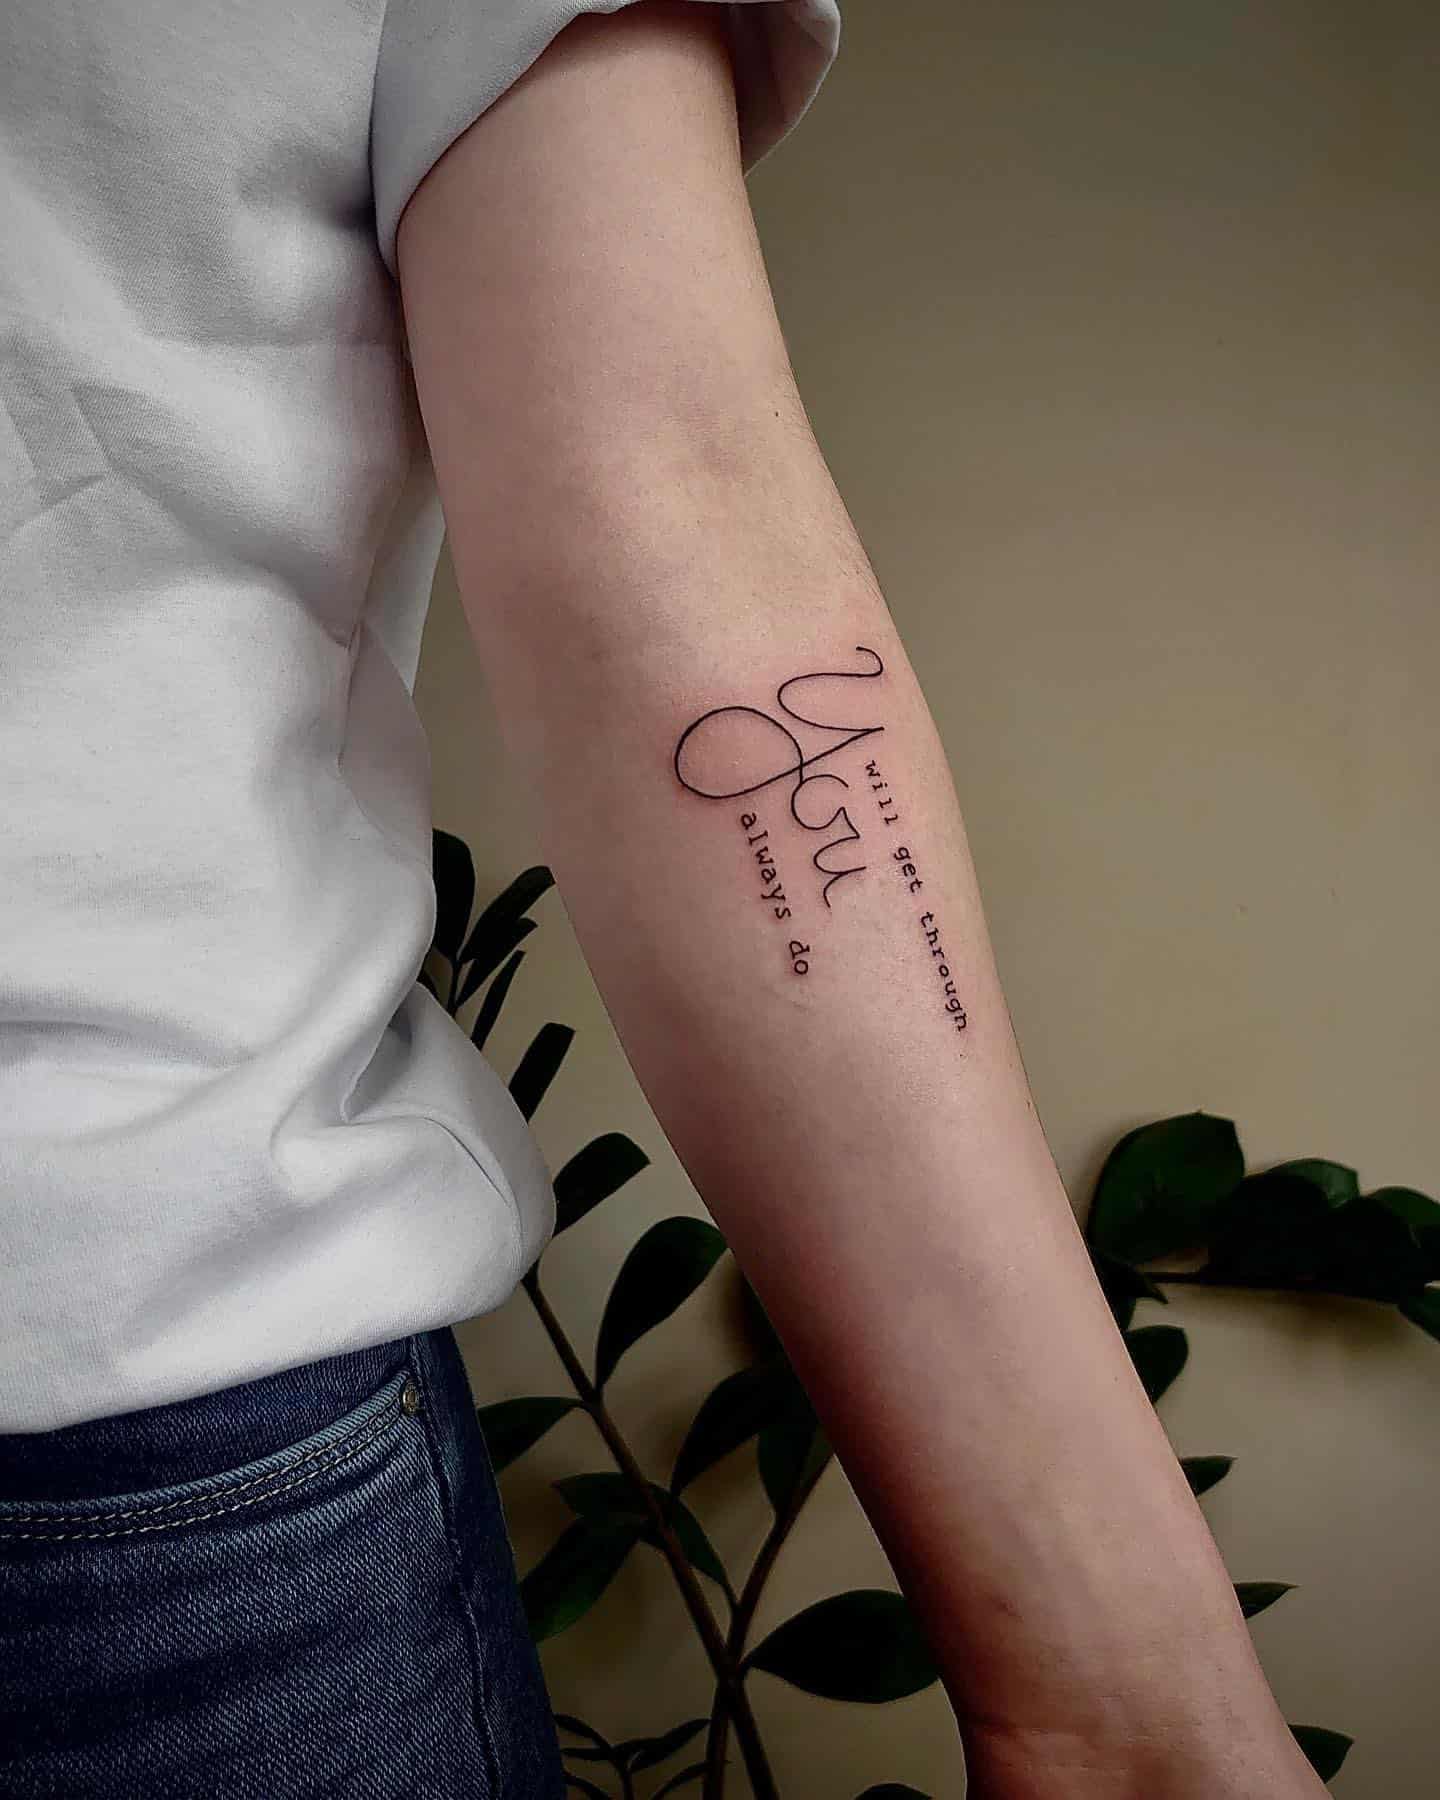 Rhys Pieces Tattoos - Names in hand written cursive on inner arm. . . .  #rhyspiecestattoos #finelinetattoos #linework #lettering #handwriting  #letteringtattoo #name #words #lineworktattoo #fresh #blacktattoos #black  #armtattoo #forearmtattoo ...